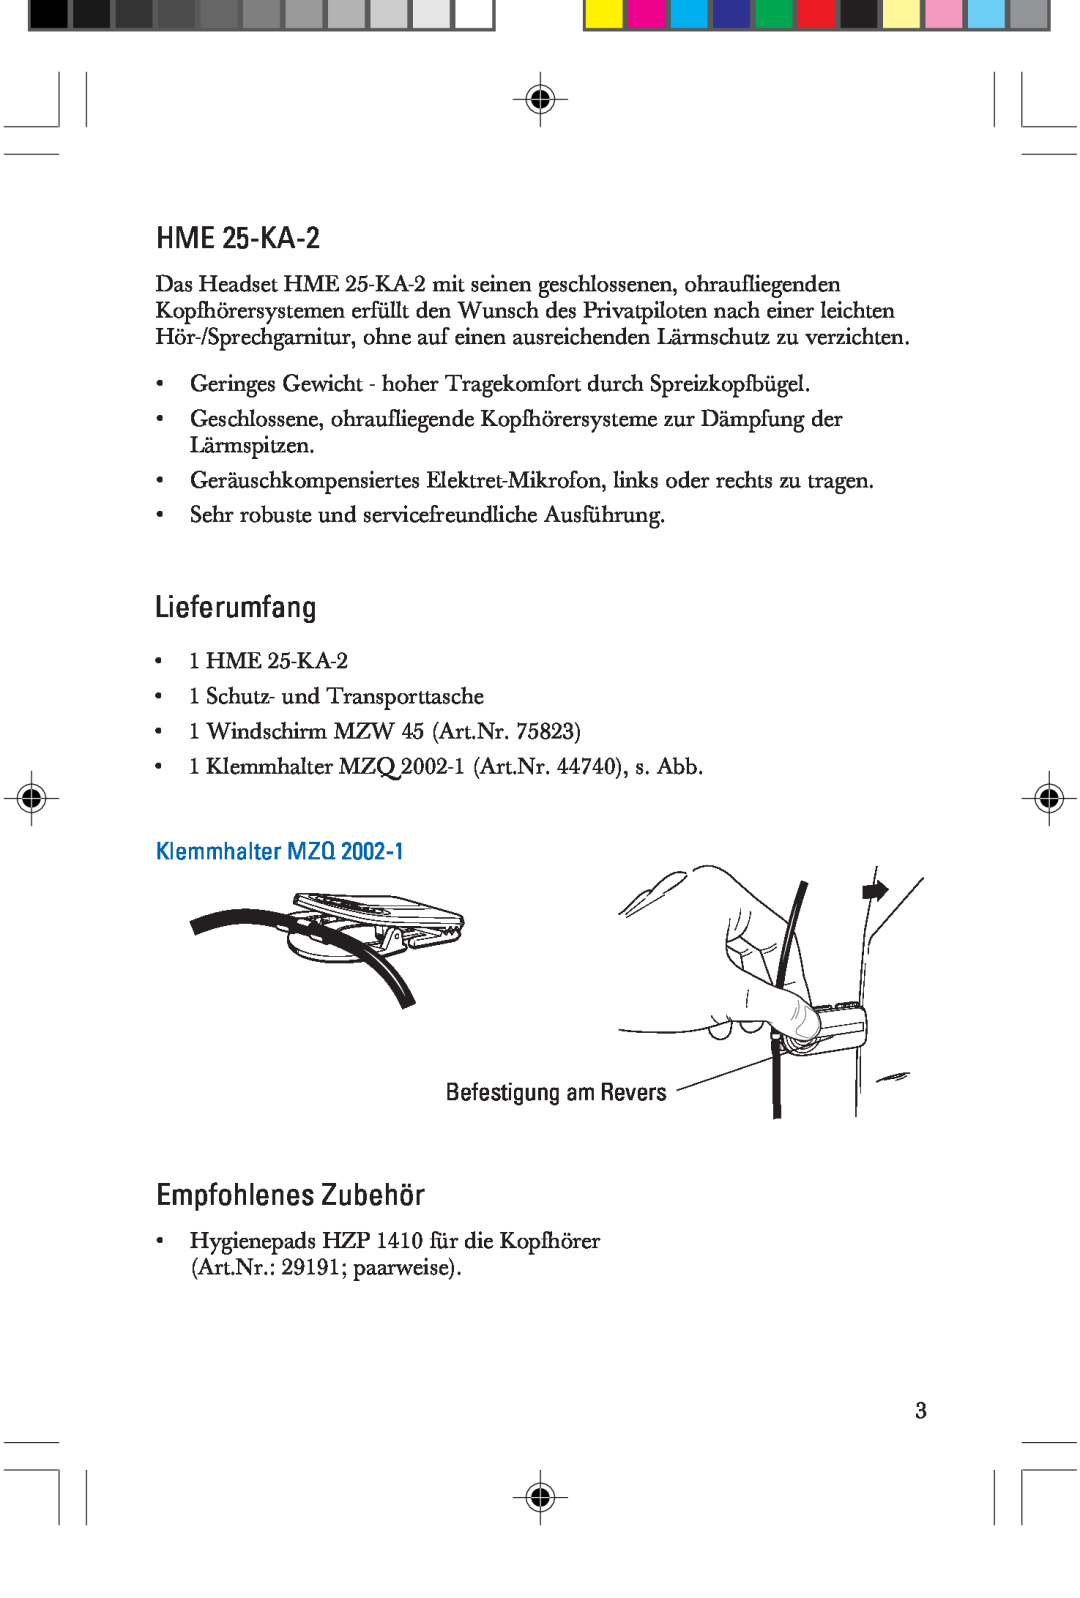 Sennheiser P/N 025-250-015 manual HME 25-KA-2, Lieferumfang, Empfohlenes Zubehör, Klemmhalter MZQ, Befestigung am Revers 